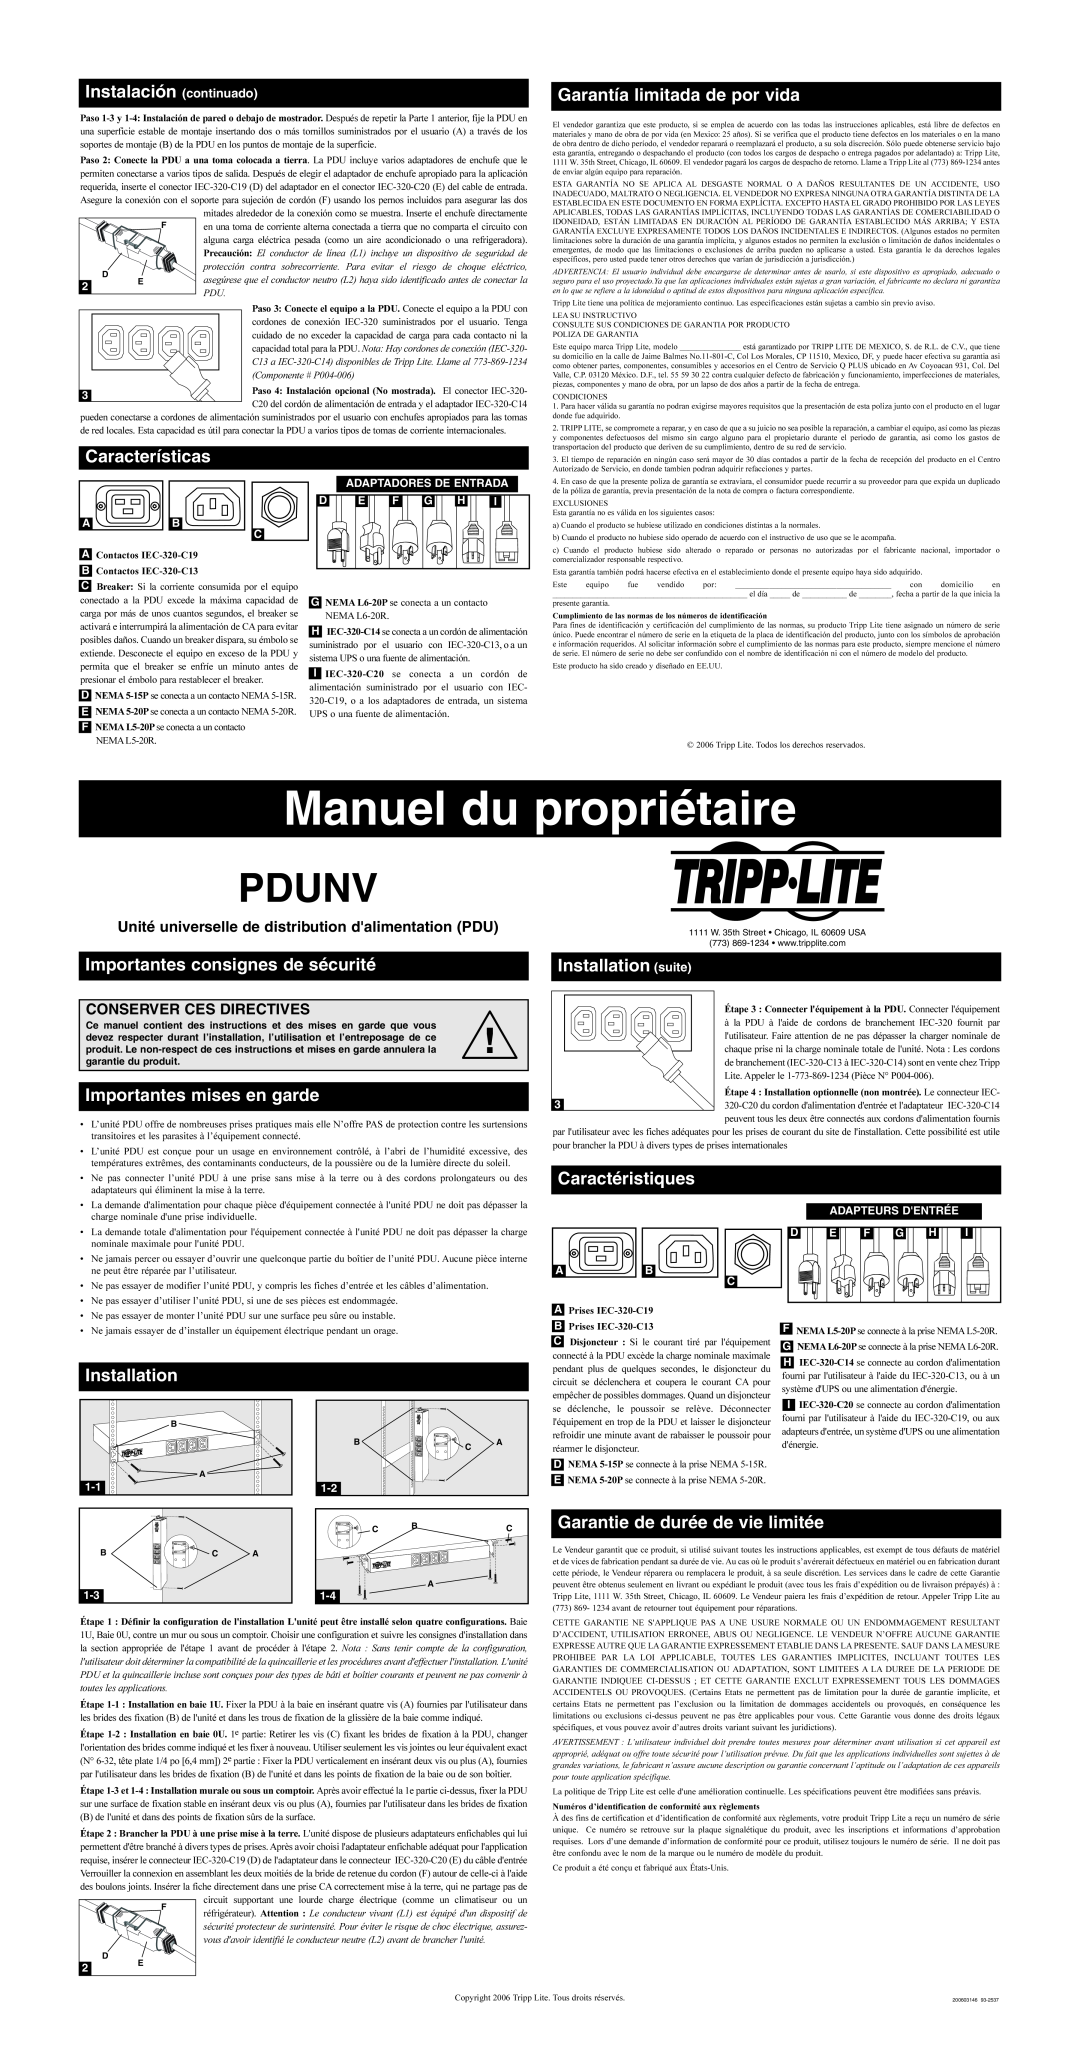 Tripp Lite PDUNV Manuel du propriétaire, Instalación continuado, Características, Garantía limitada de por vida, Pdunv 